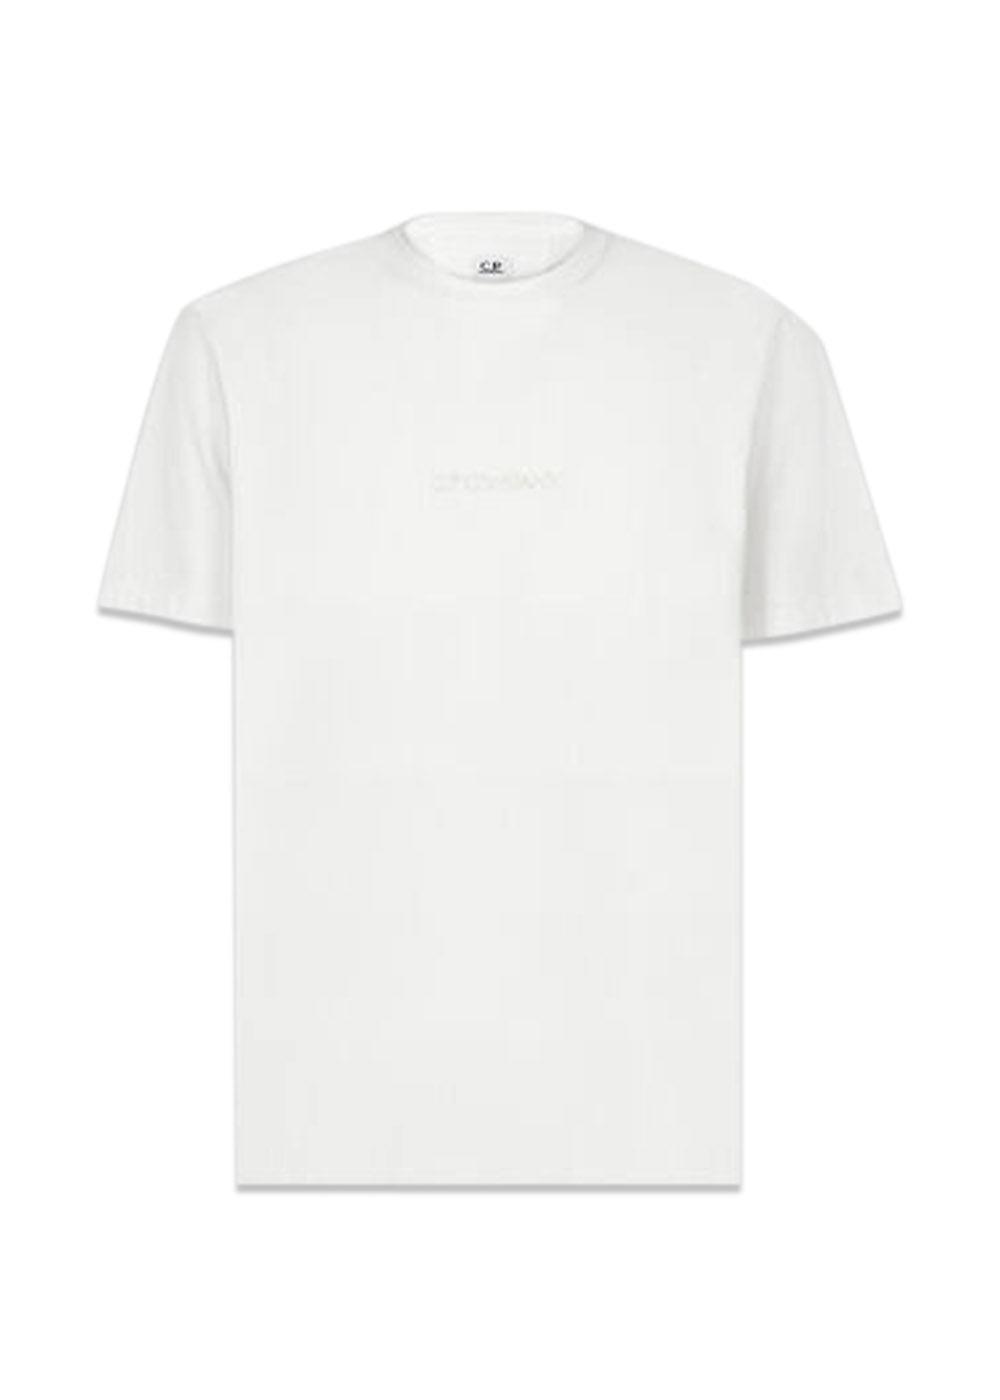 C.P. Companys Logo Tee - Gauze White. Køb t-shirts her.